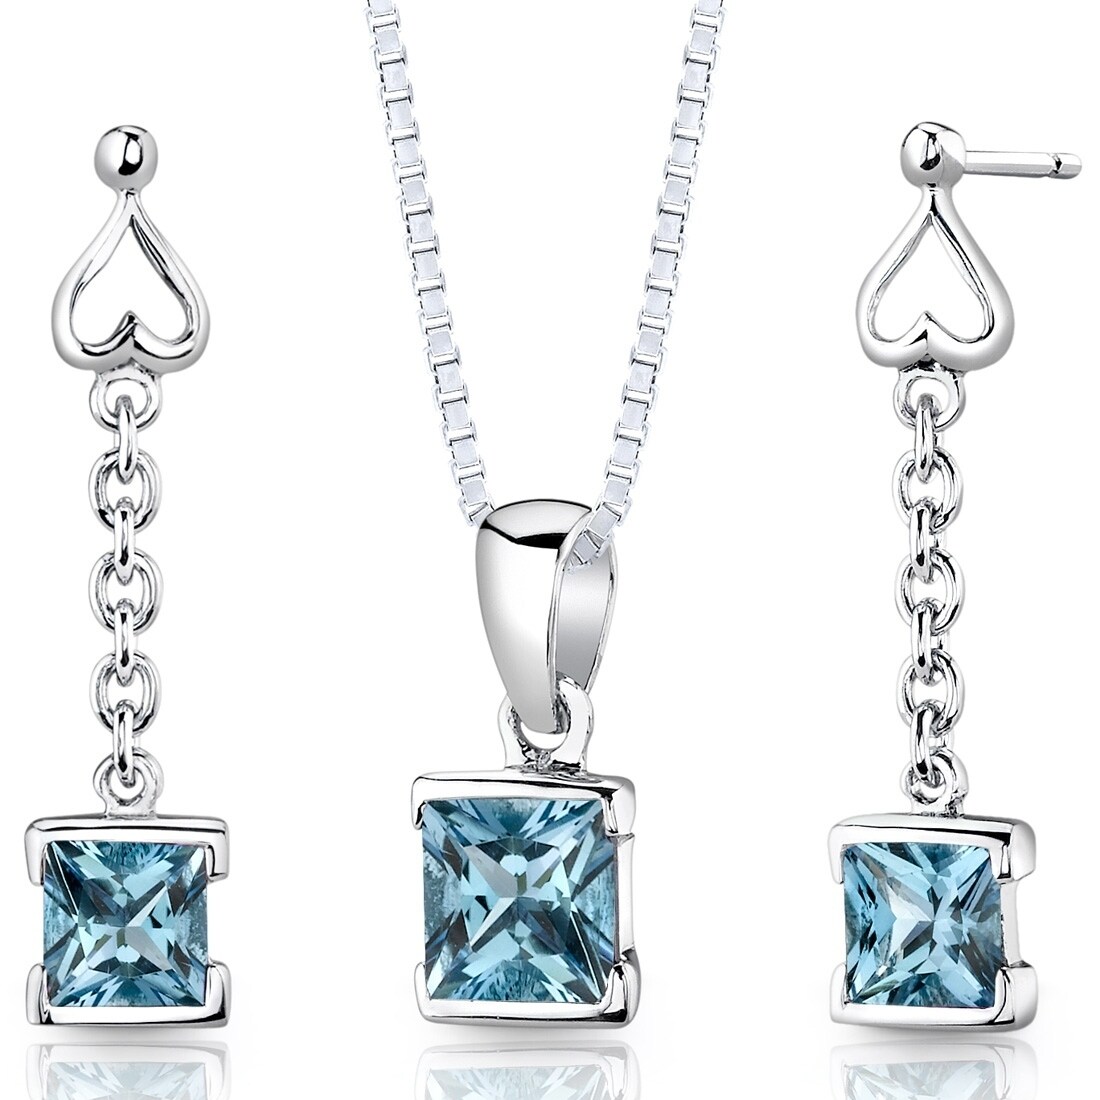 Peora Swiss Blue Topaz Pendant Earrings Necklace Sterling Silver Pear Shape 1.75 Carats